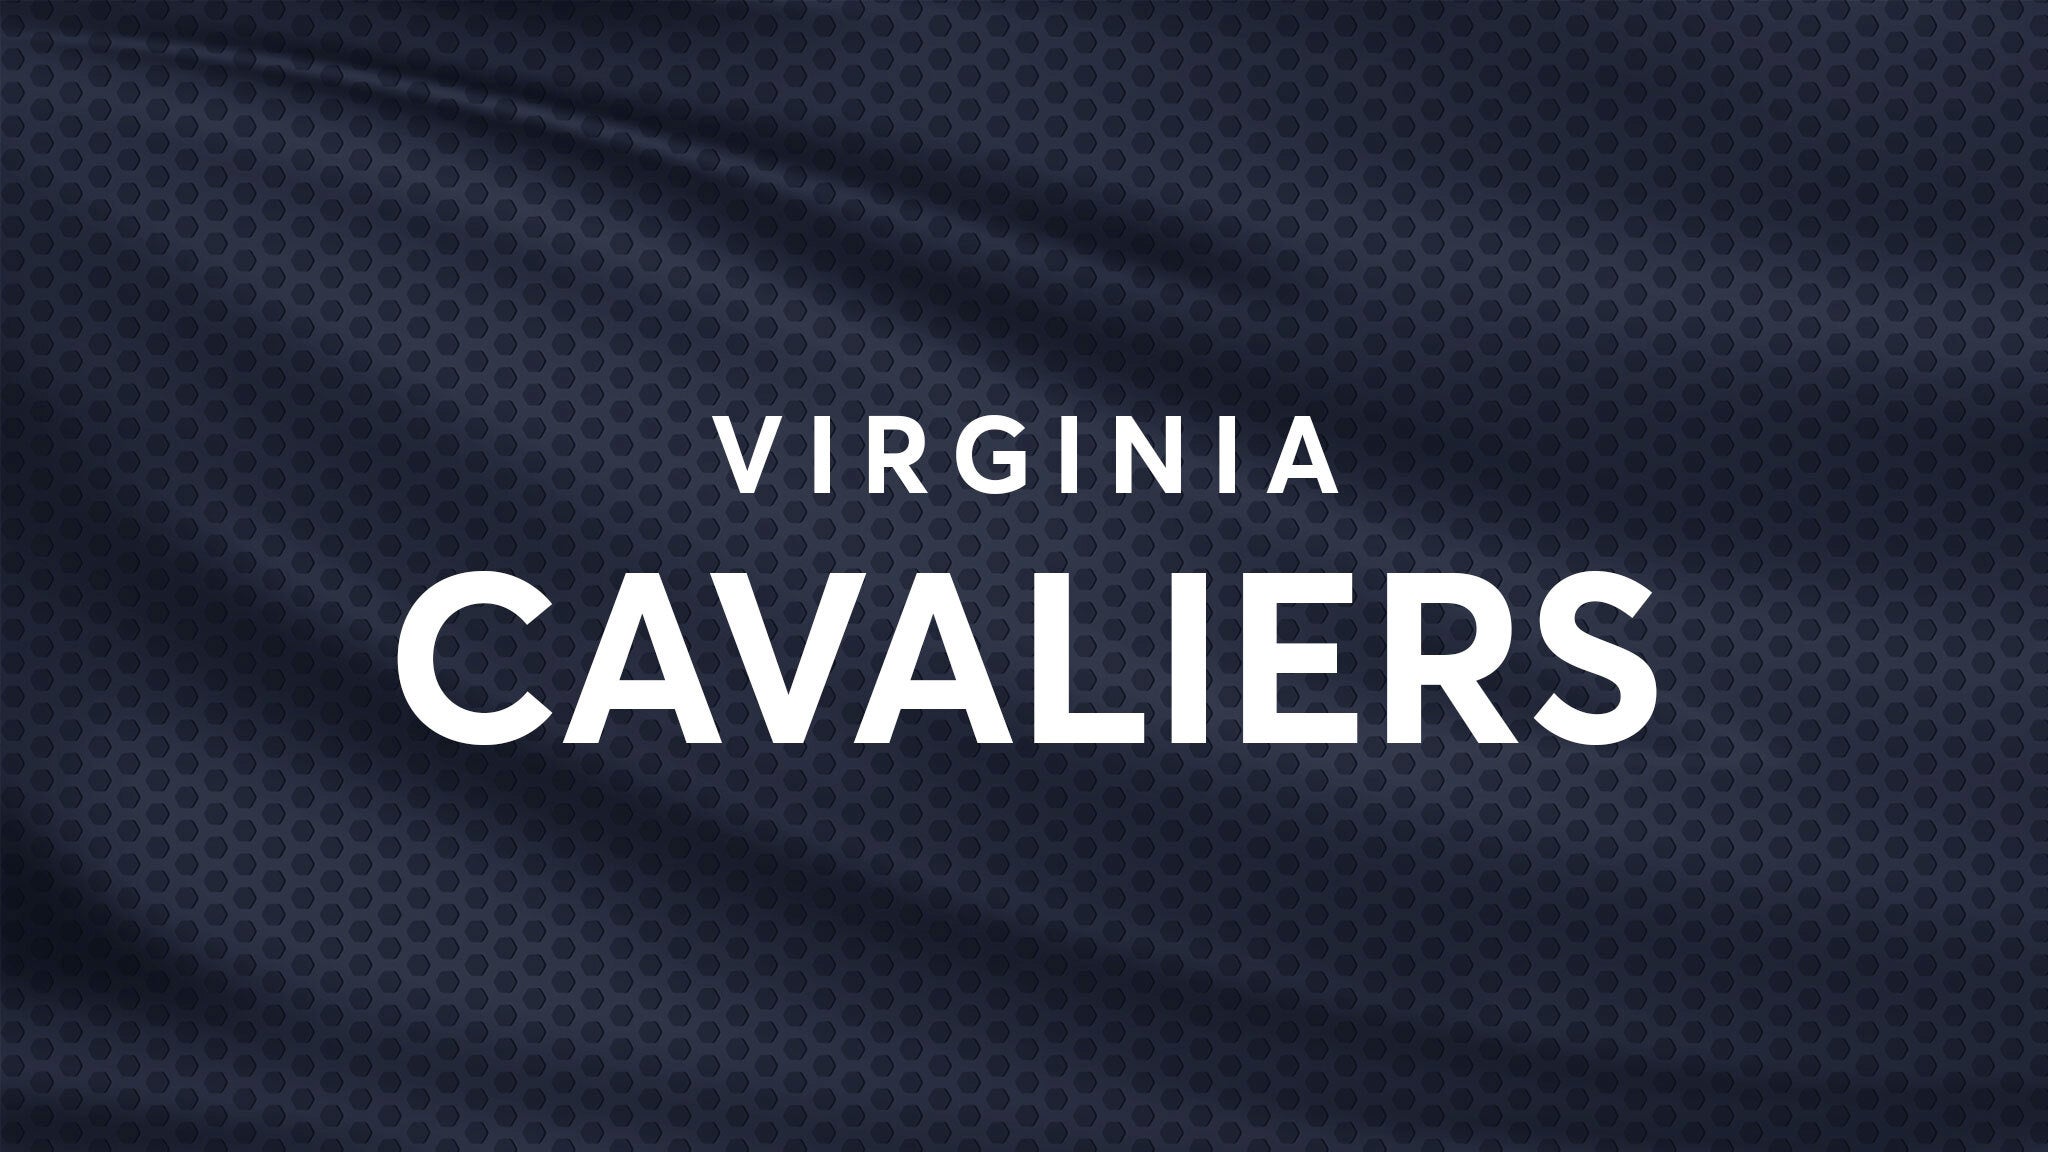 Virginia Cavaliers Football vs. North Carolina Tar Heels Football hero